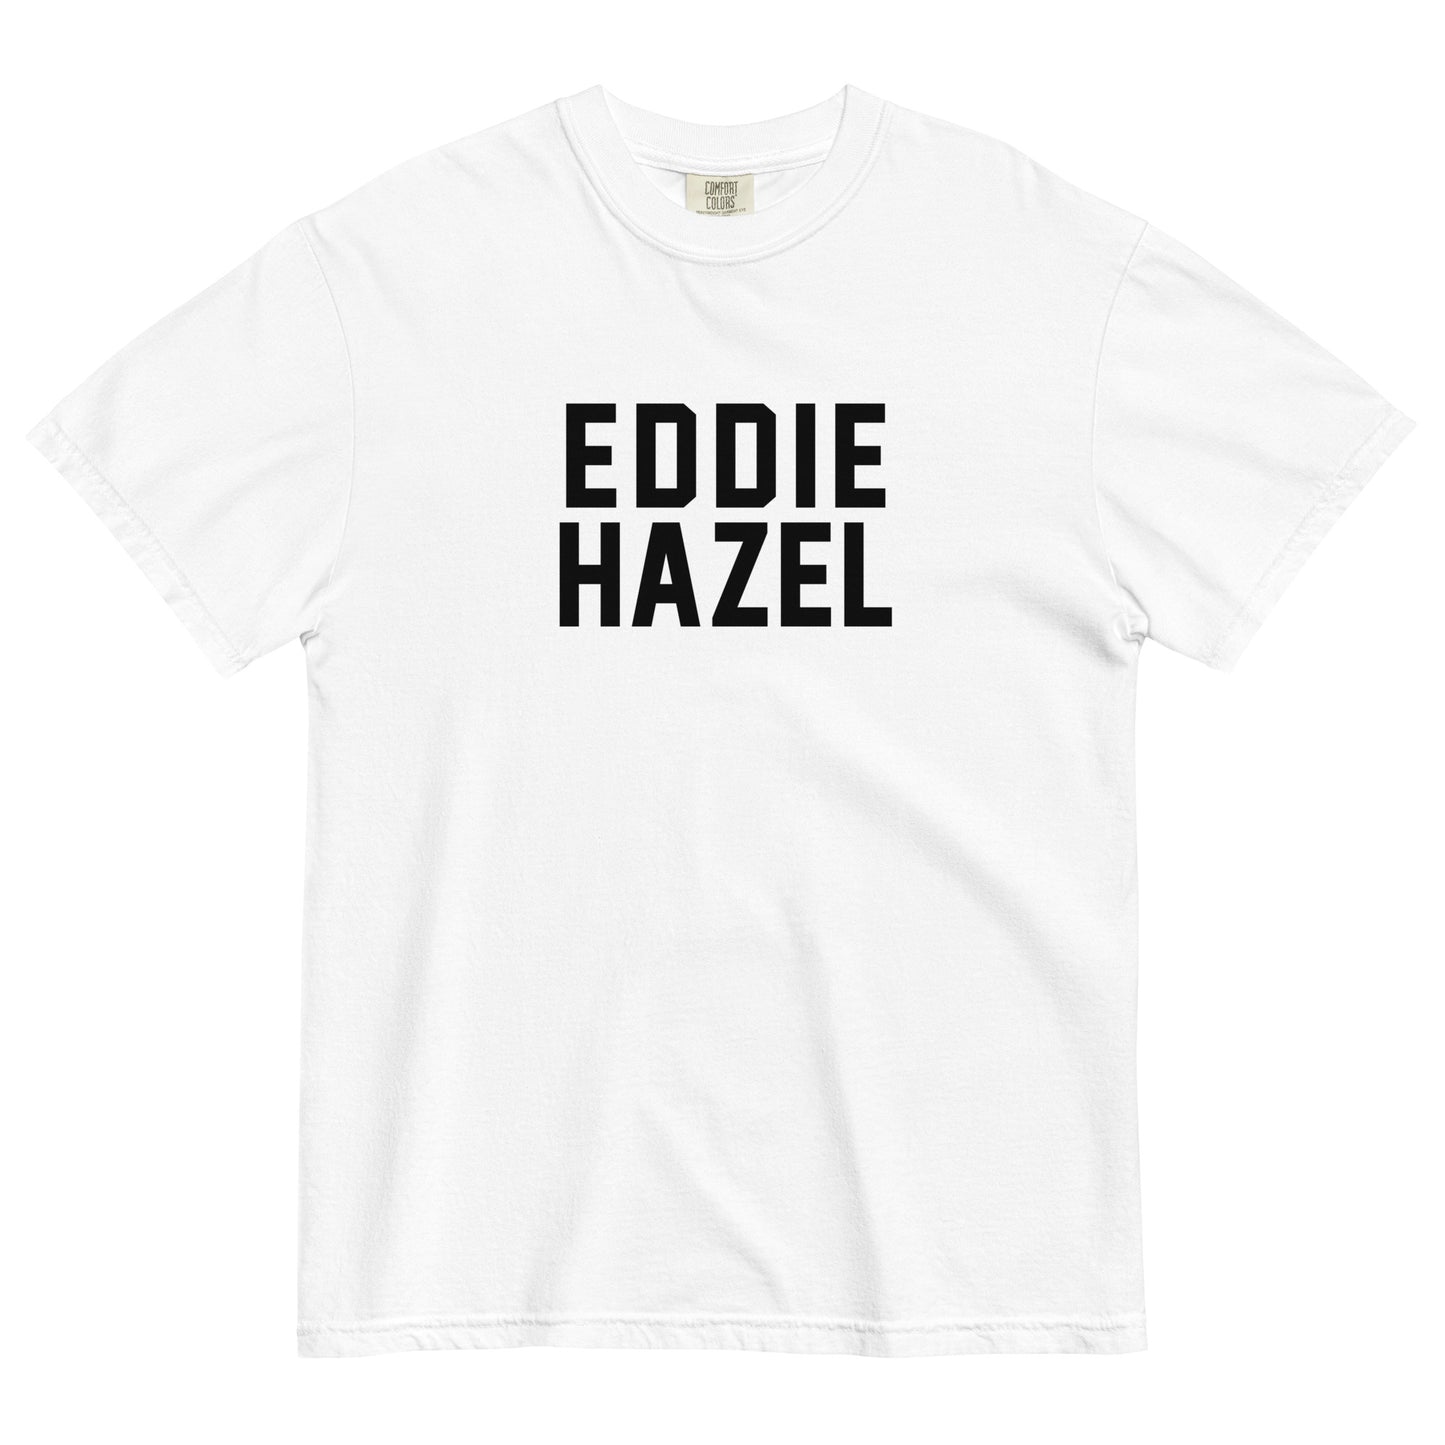 EDDIE HAZEL